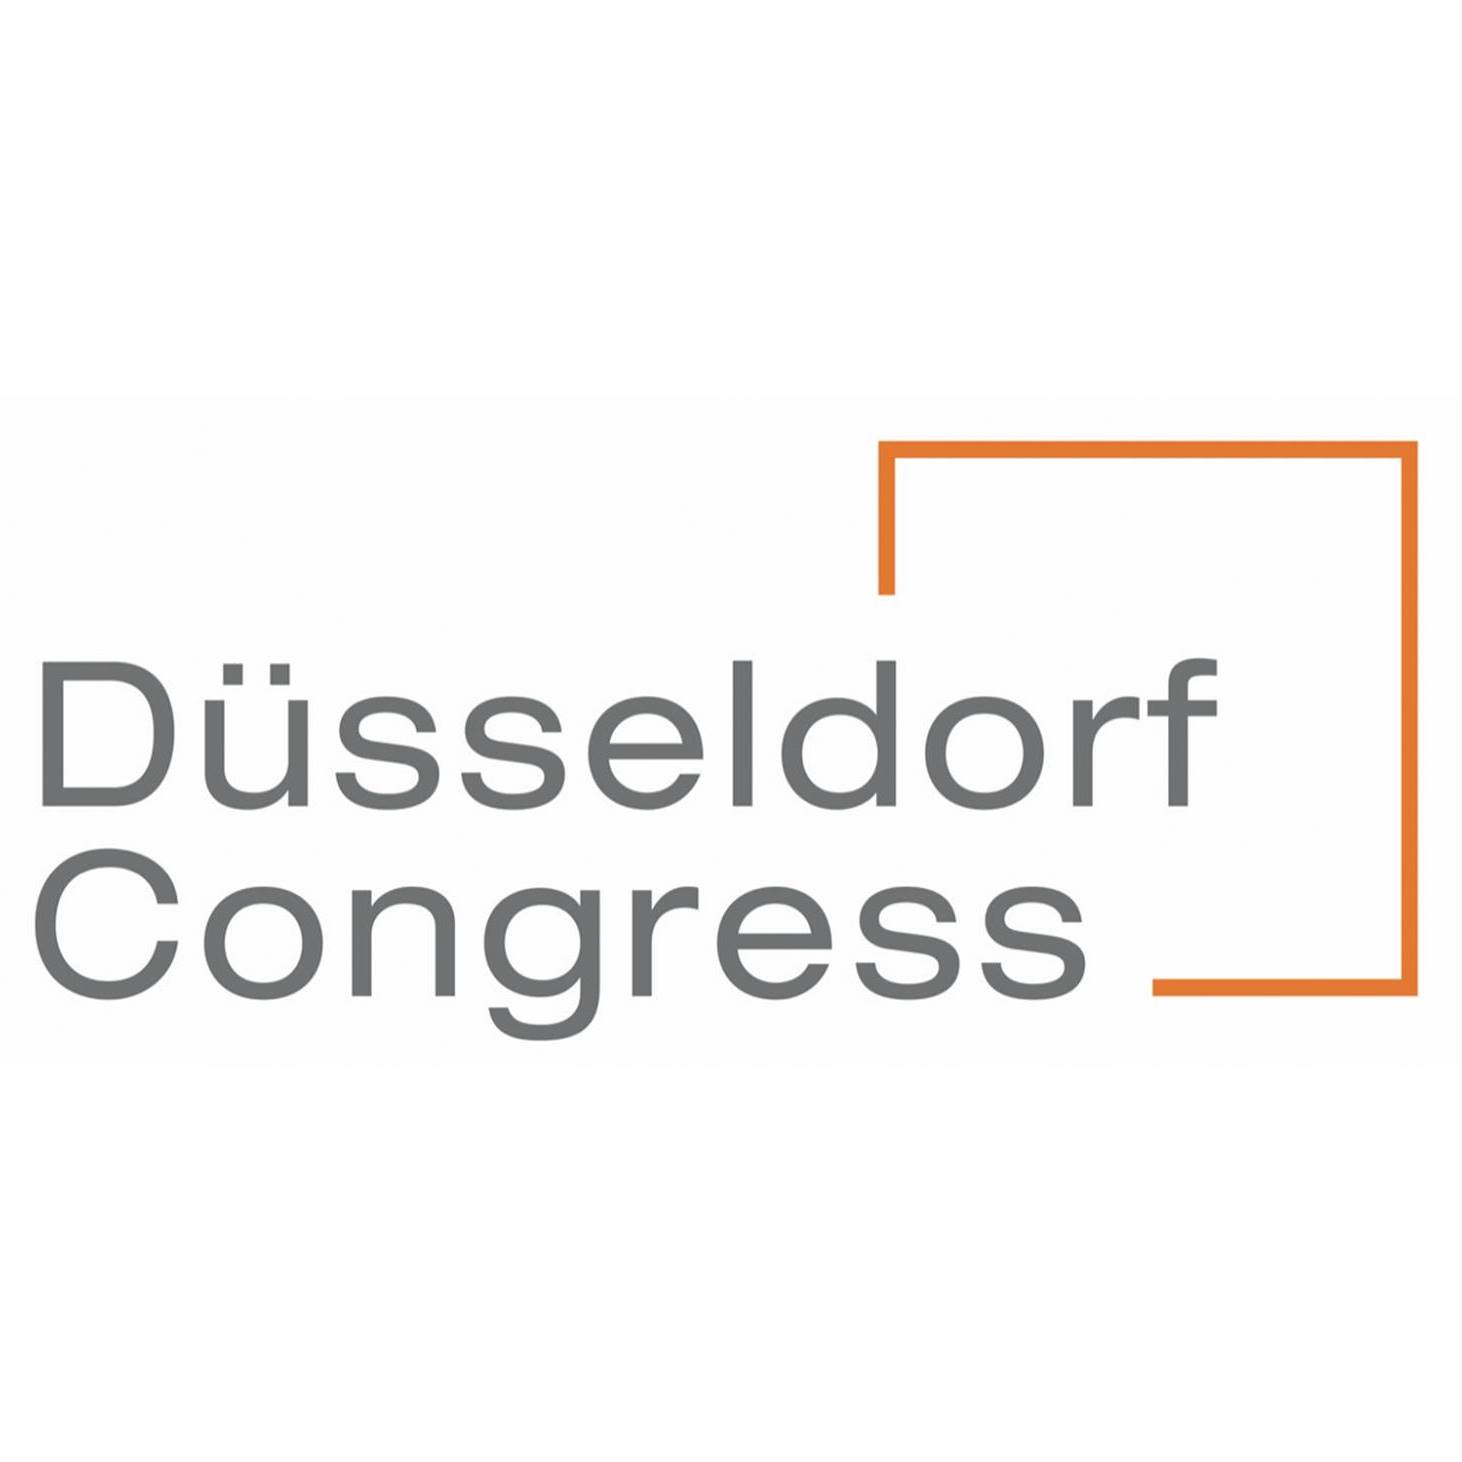 Image result for Congress Centre Dusseldorf